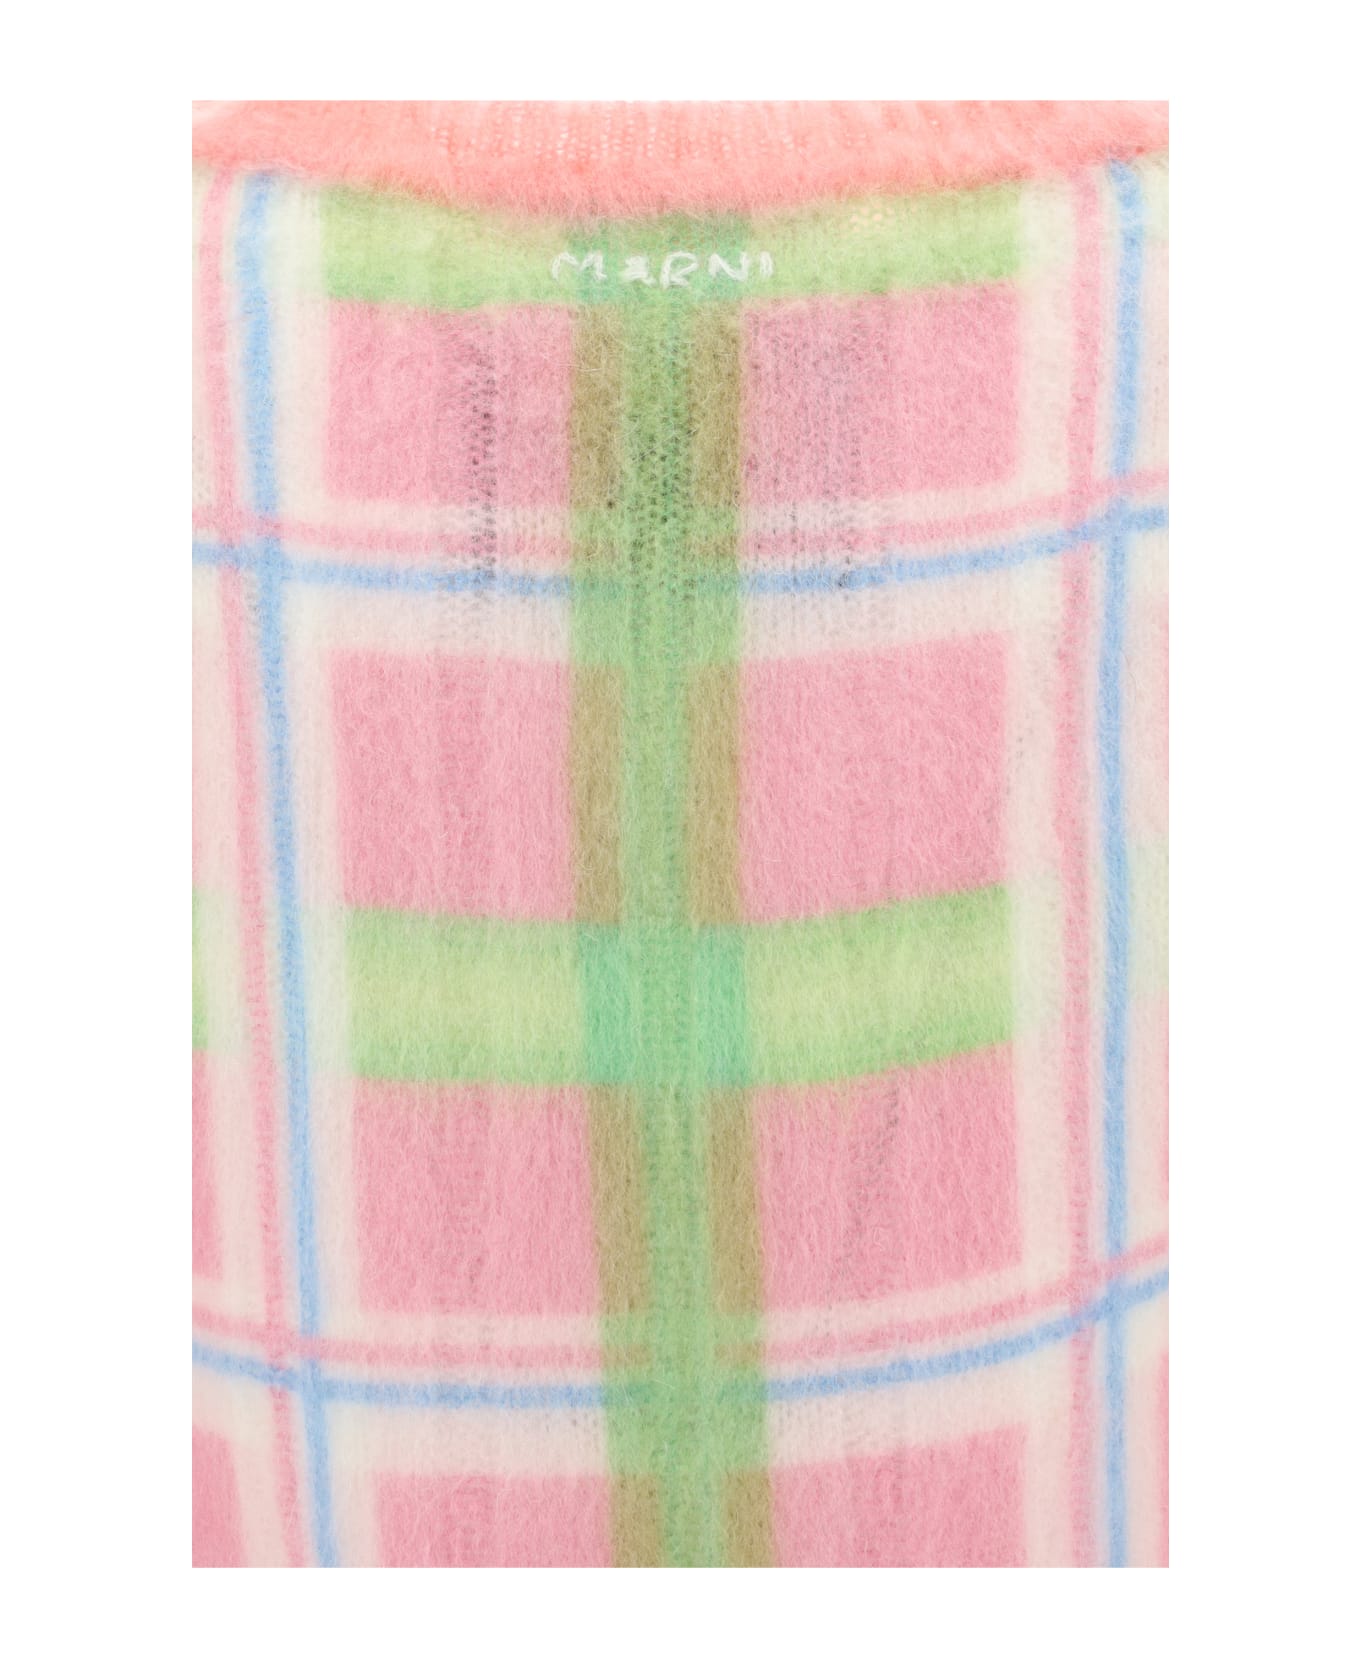 Marni Sweater - Pink Gummy